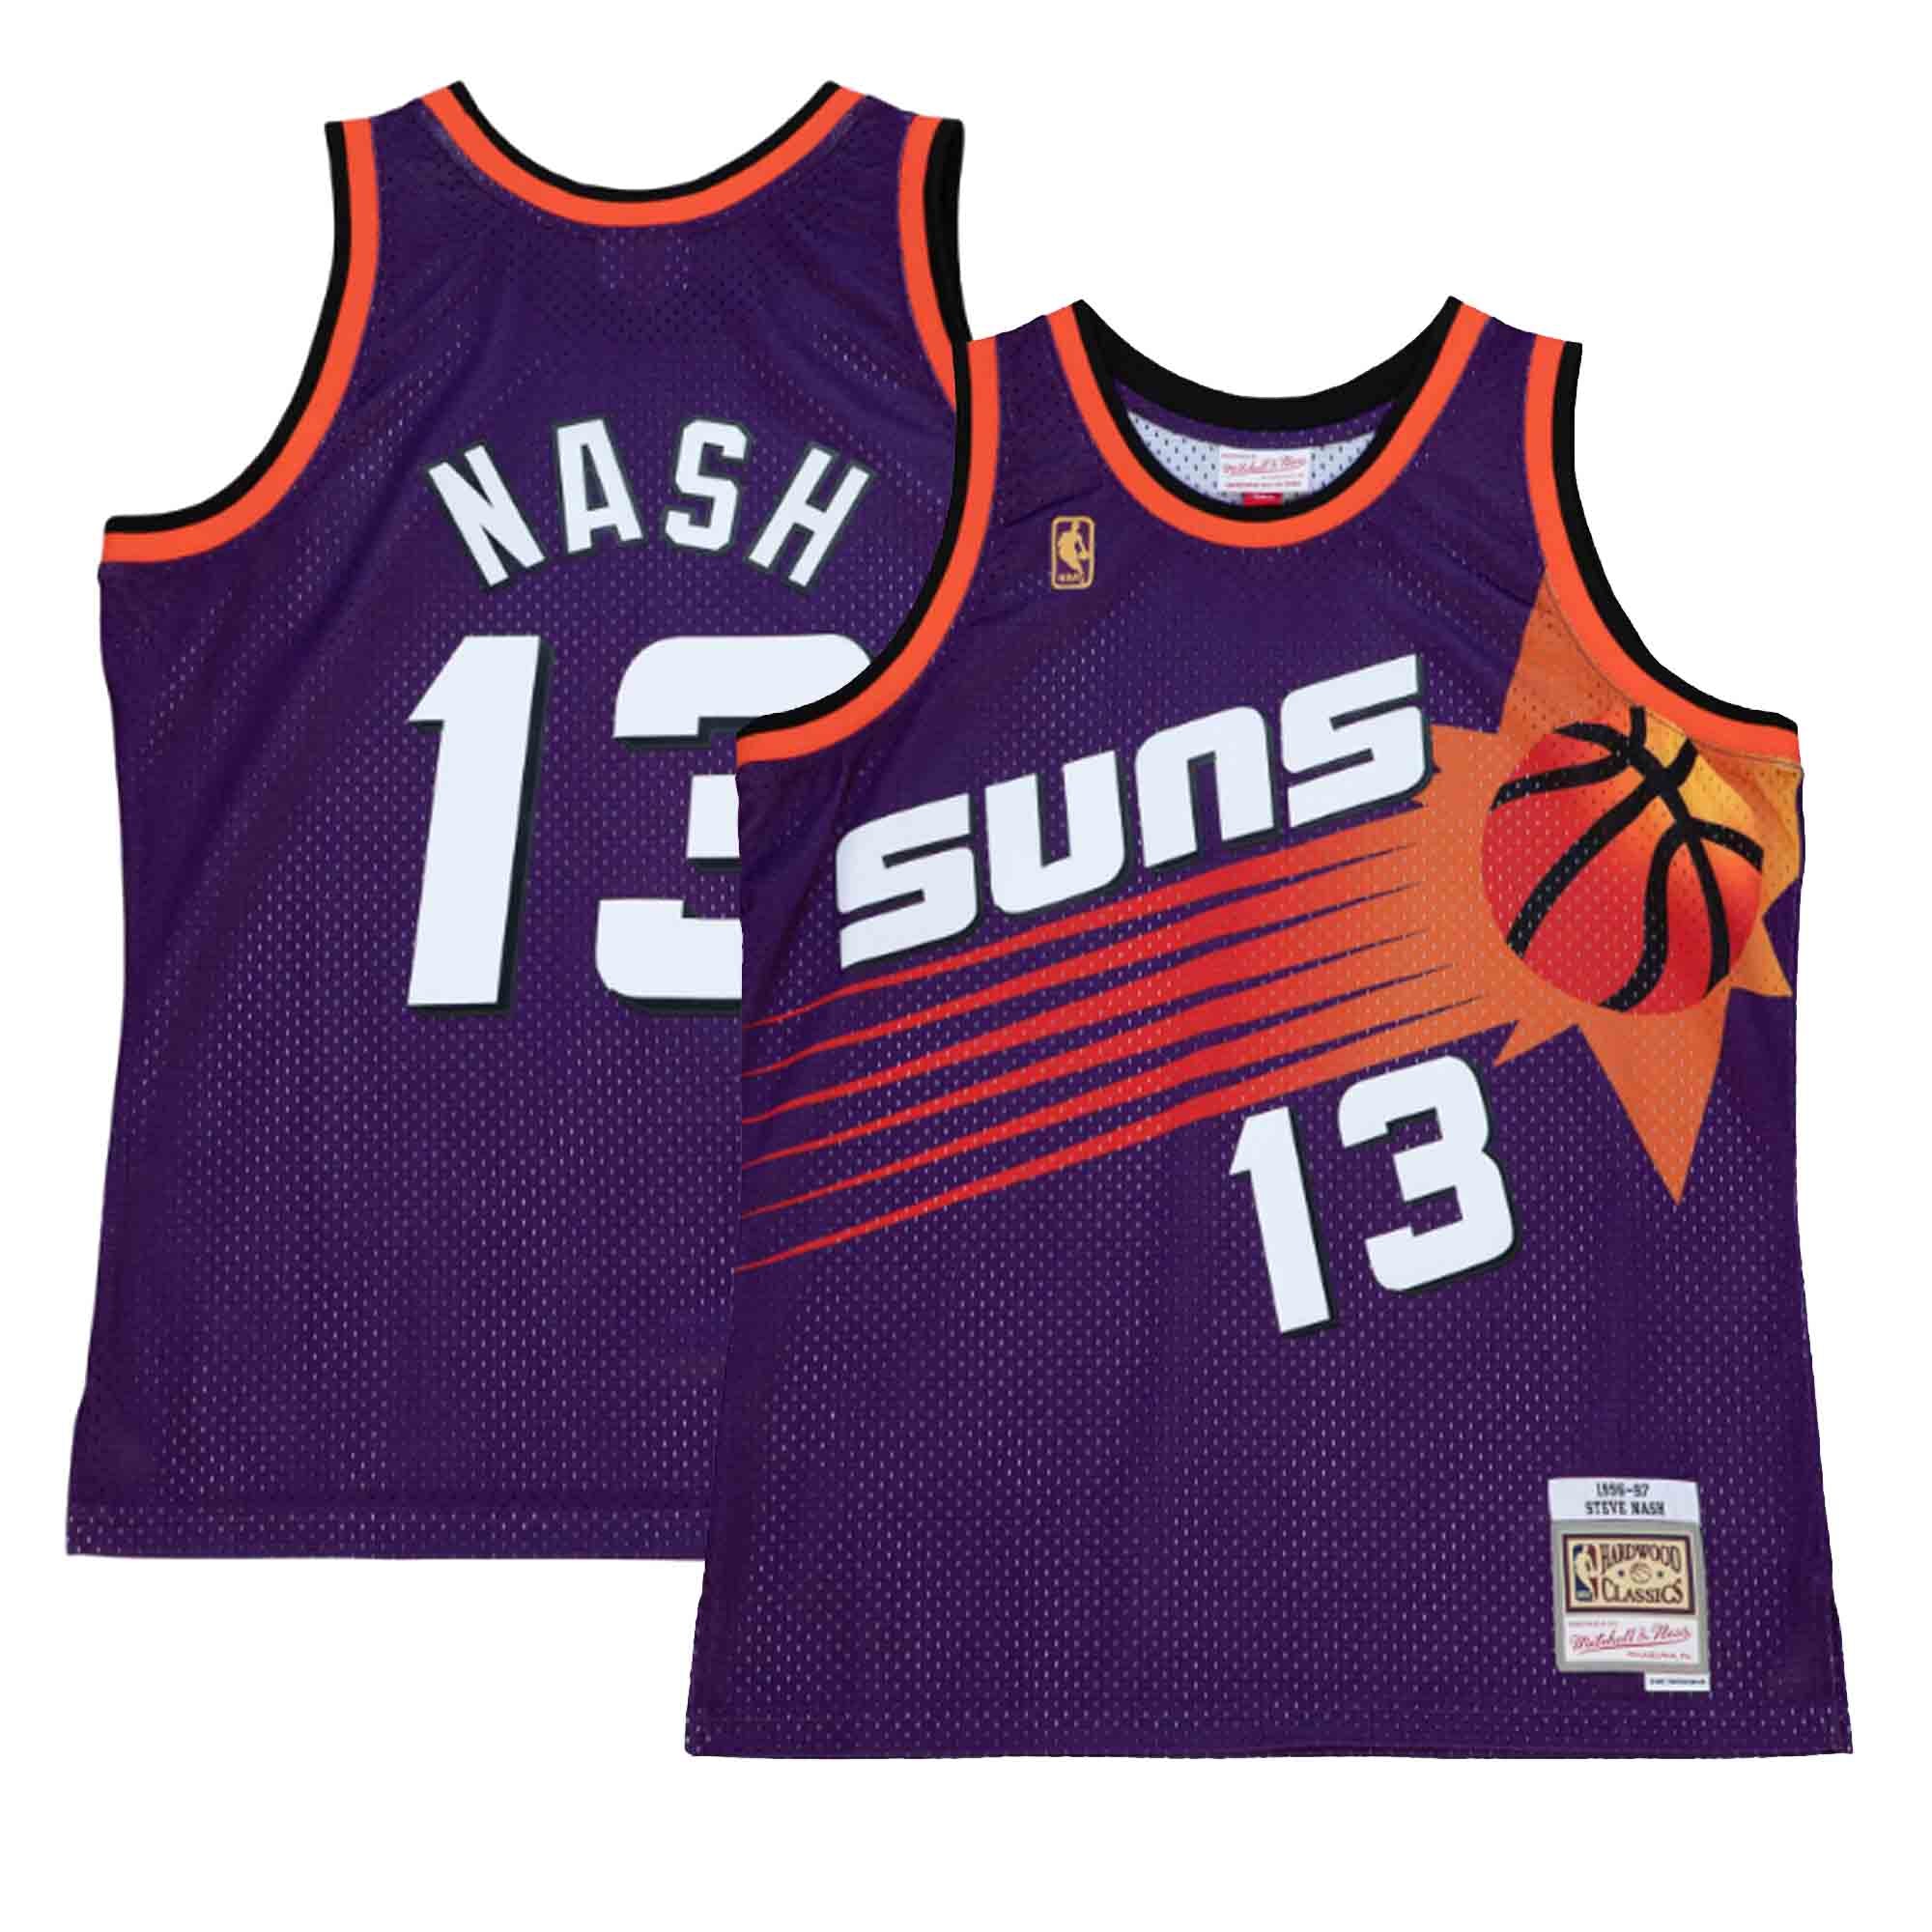 NBA Jersey No. 13 Basketball Jersey Orange Suns Steve Nash Air Jordan  Swingman